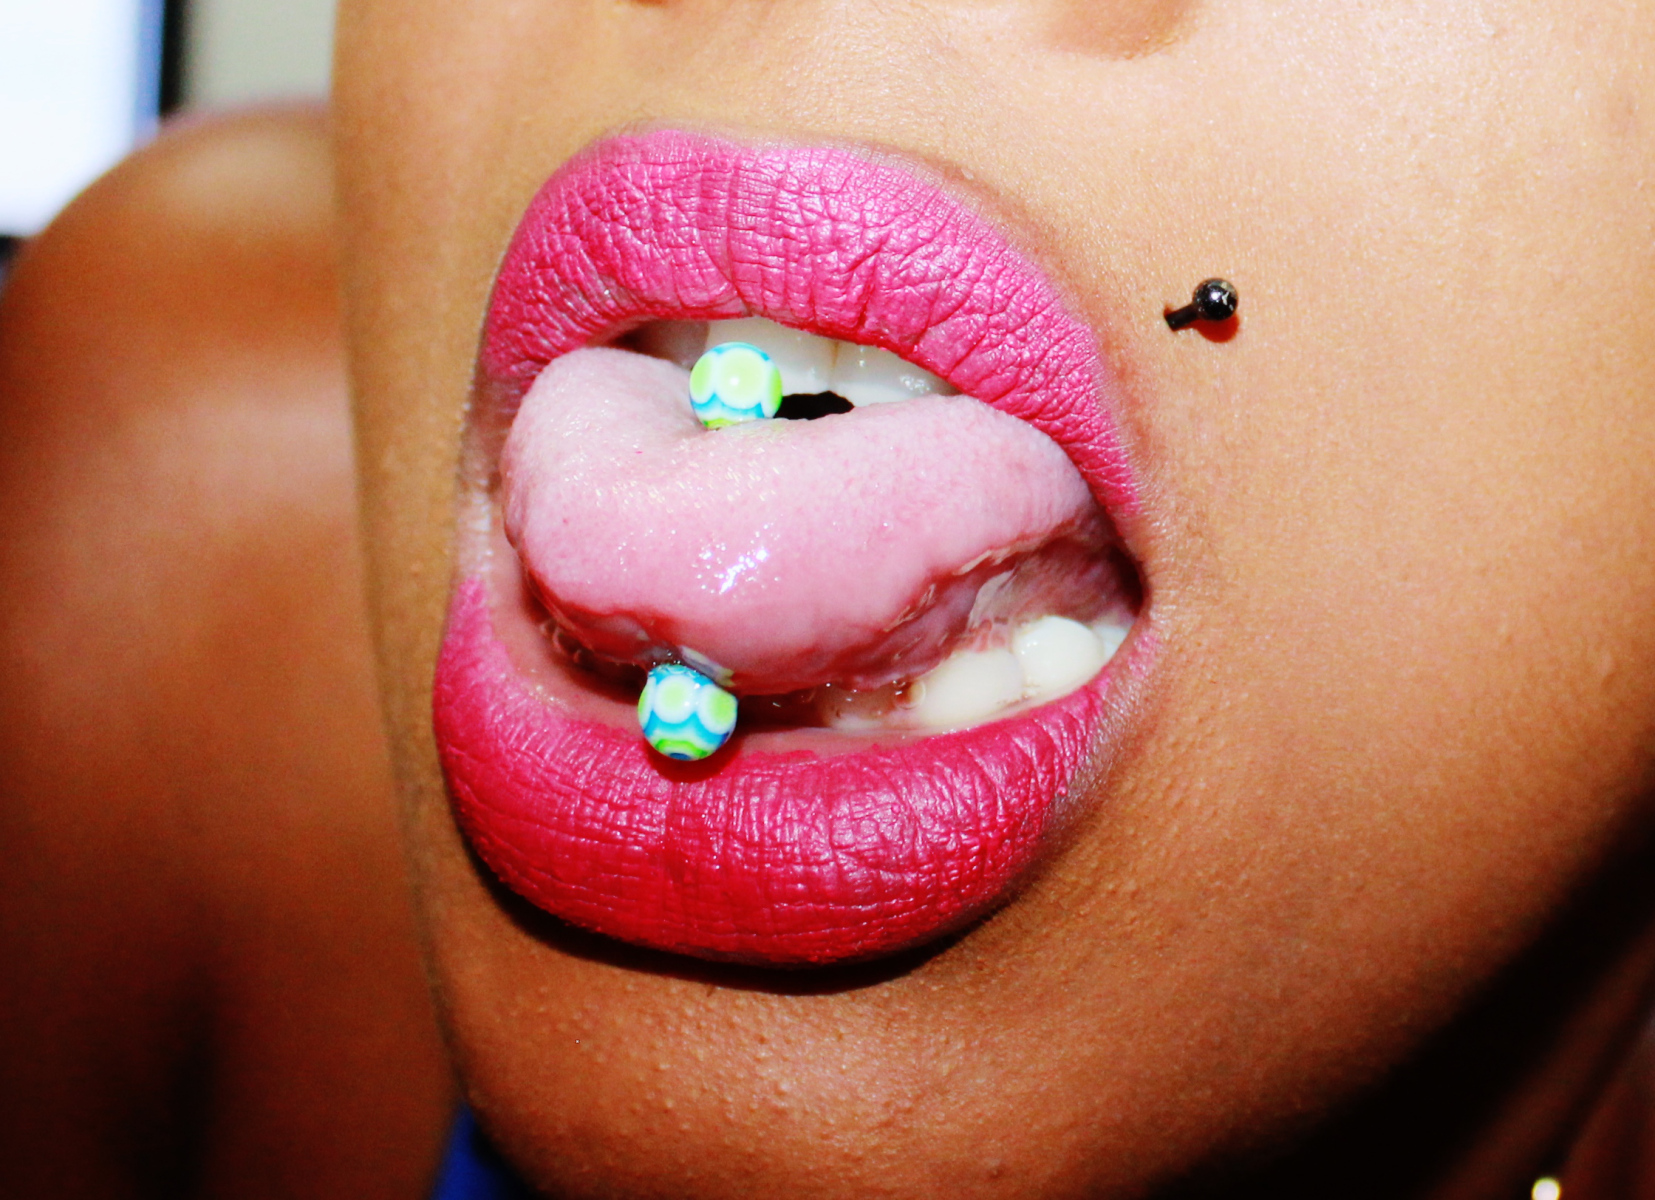 Black Stud Monroe And Tongue Piercing Image.